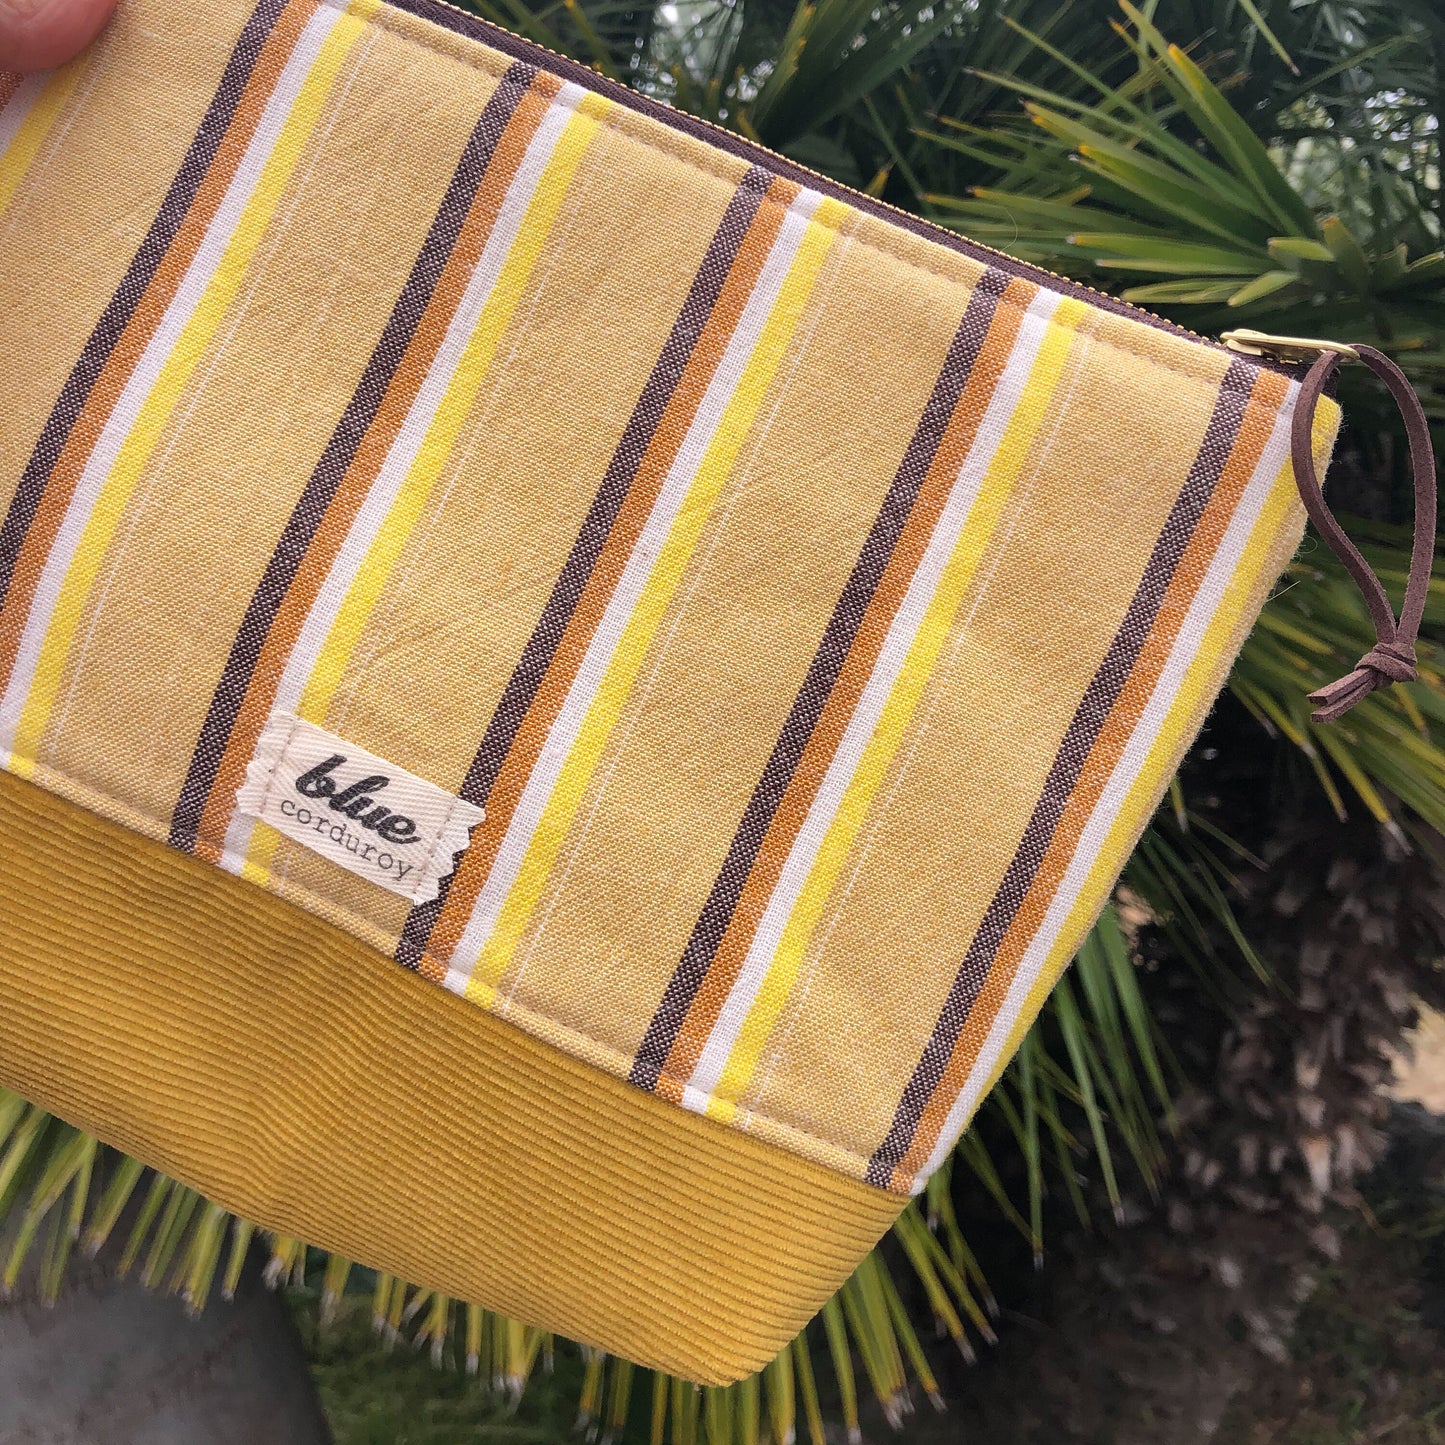 Beach Essentials Zipper Pouch, Mustard Yellow Woven Striped Bag, Travel Make up Bag, Art Supplies Pouch, Gift for Student, Gift for Traveler